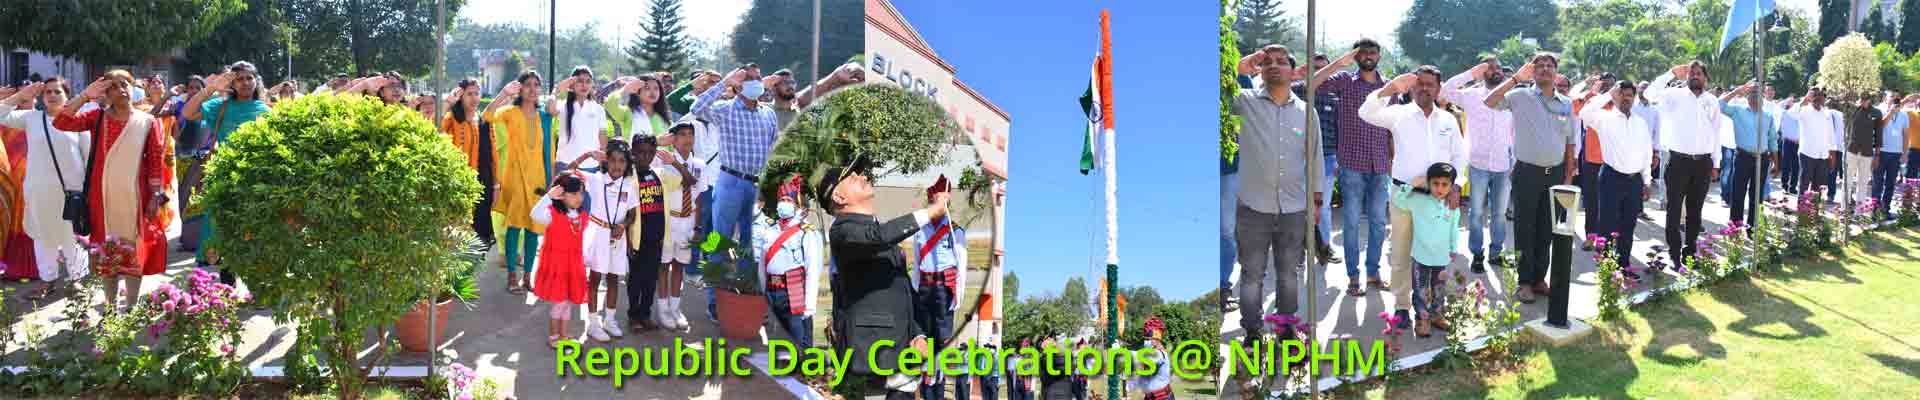 Republic Day Celebrations @ NIPHM